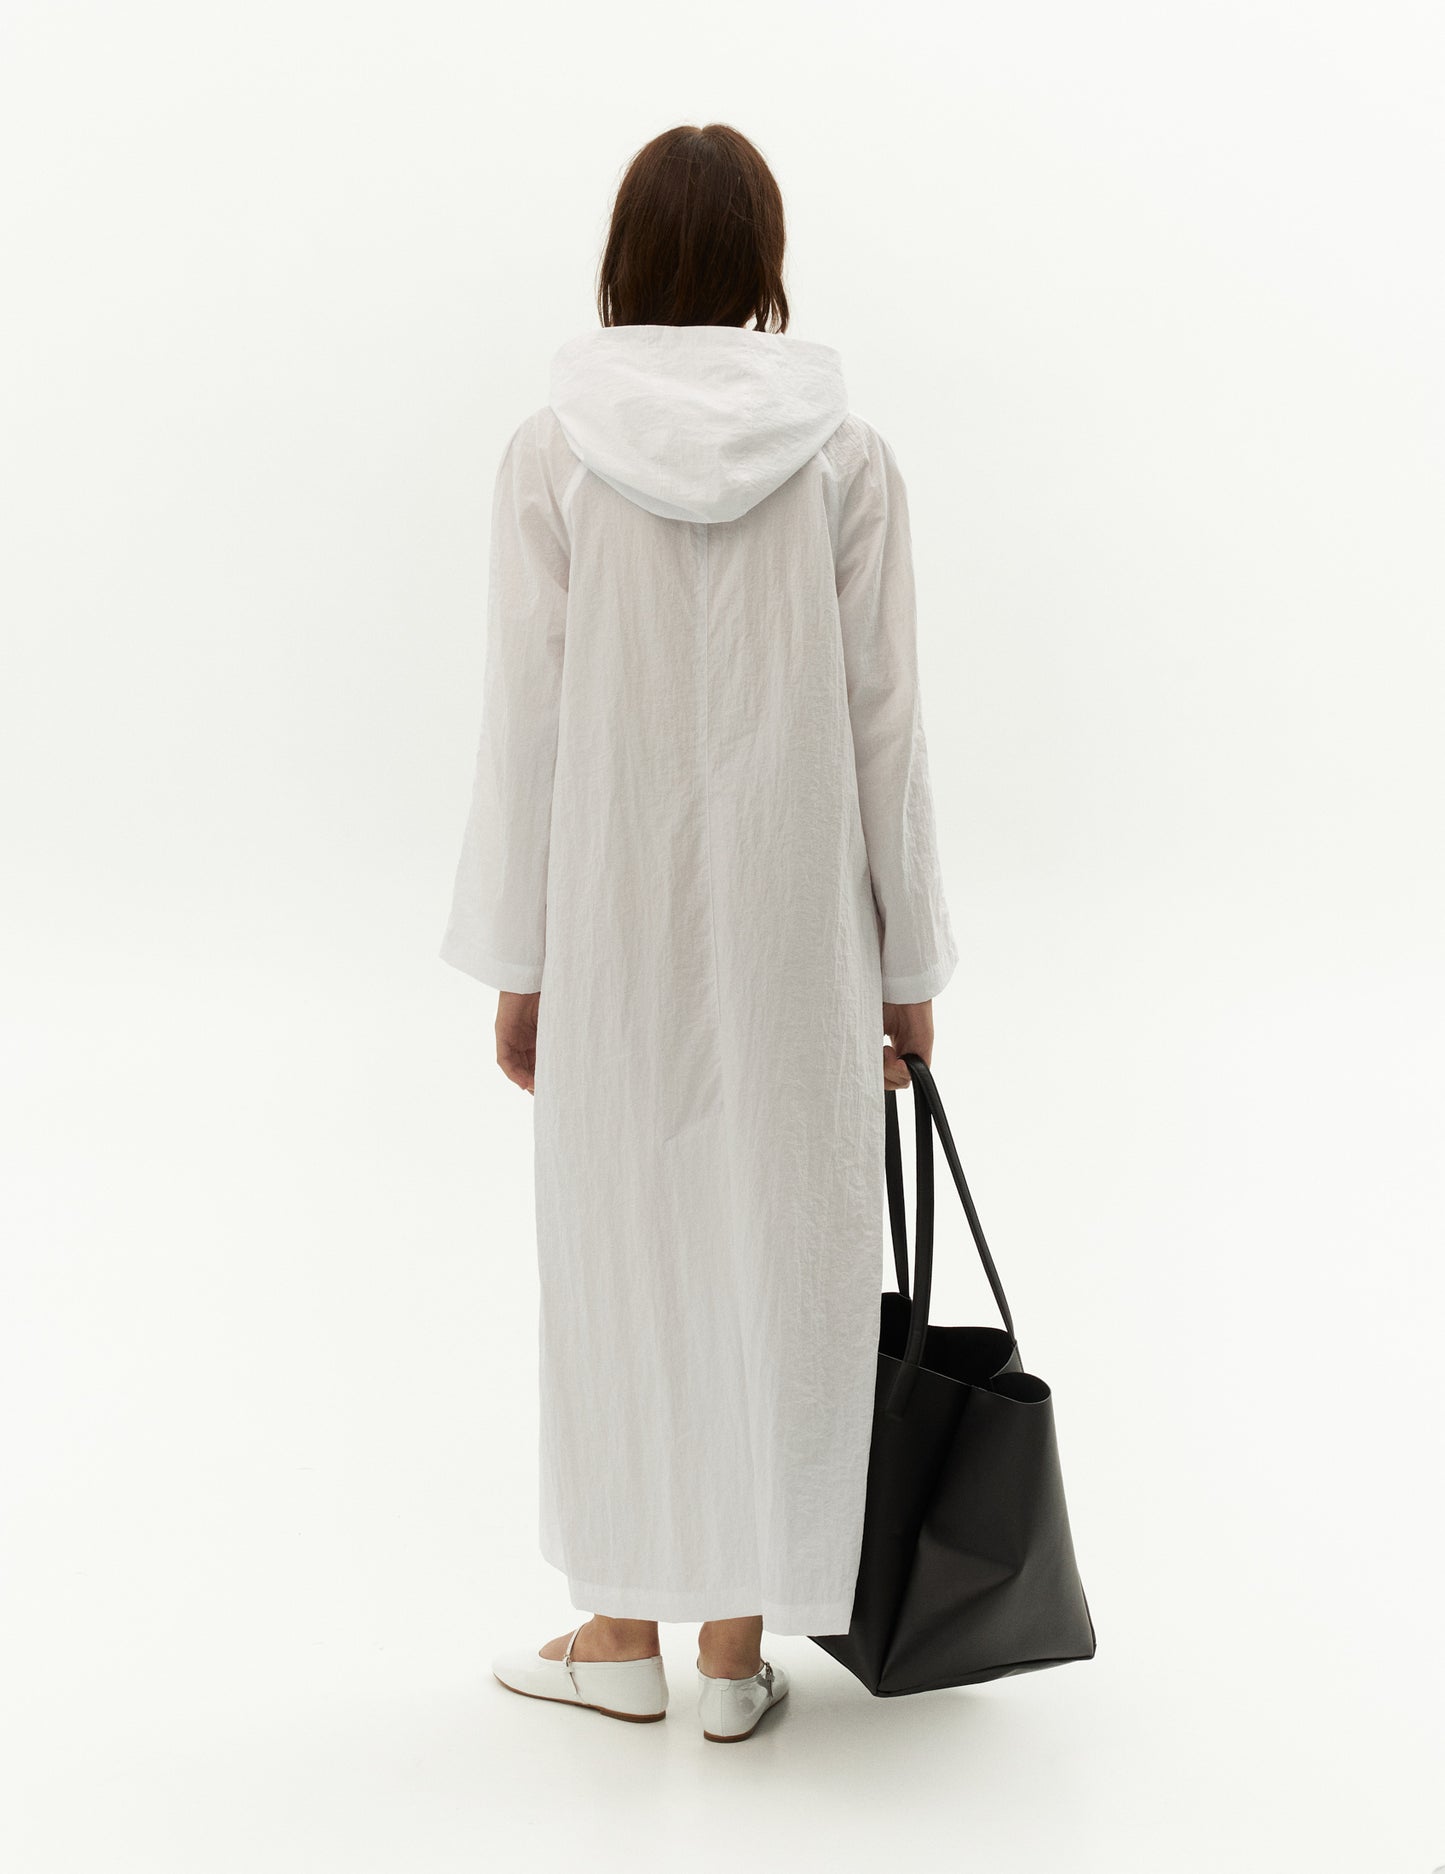 Textured white long raincoat with hood. White raincoat. Waterproof raincoat from forma clothing brand.